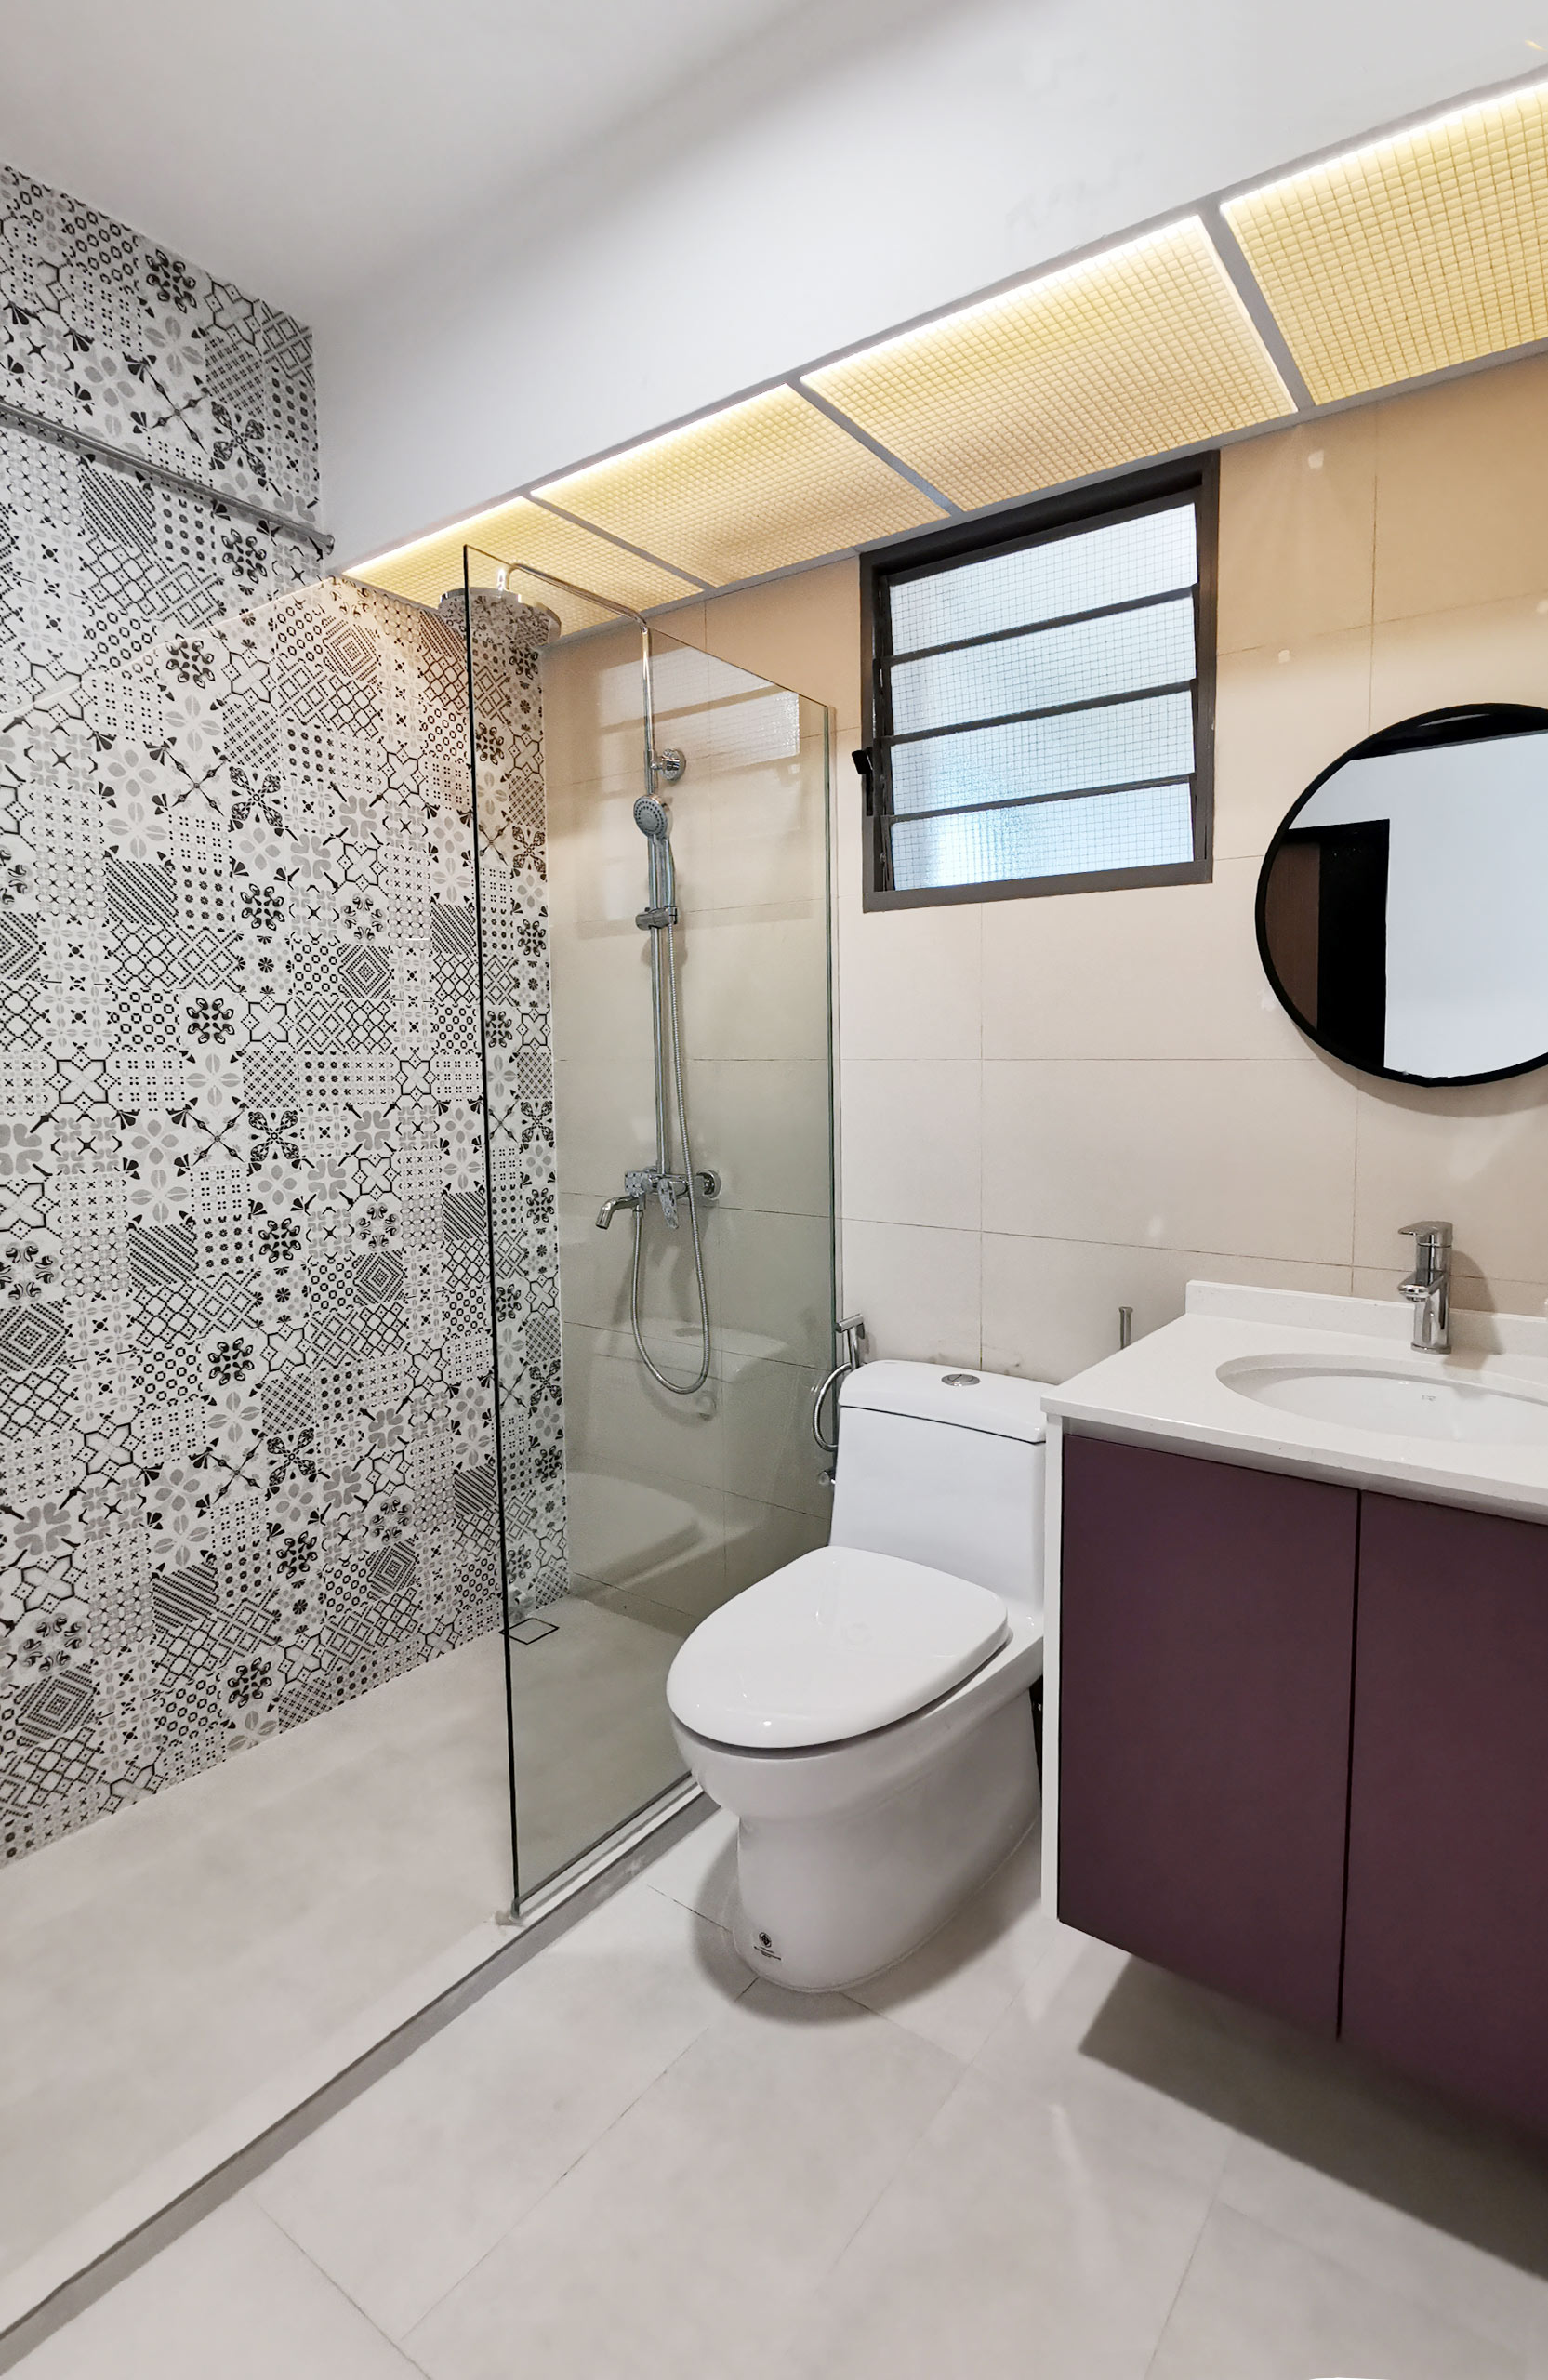 HDB Resale Makeover Toilet Renovation ideas anchorvale crescent pattern tile